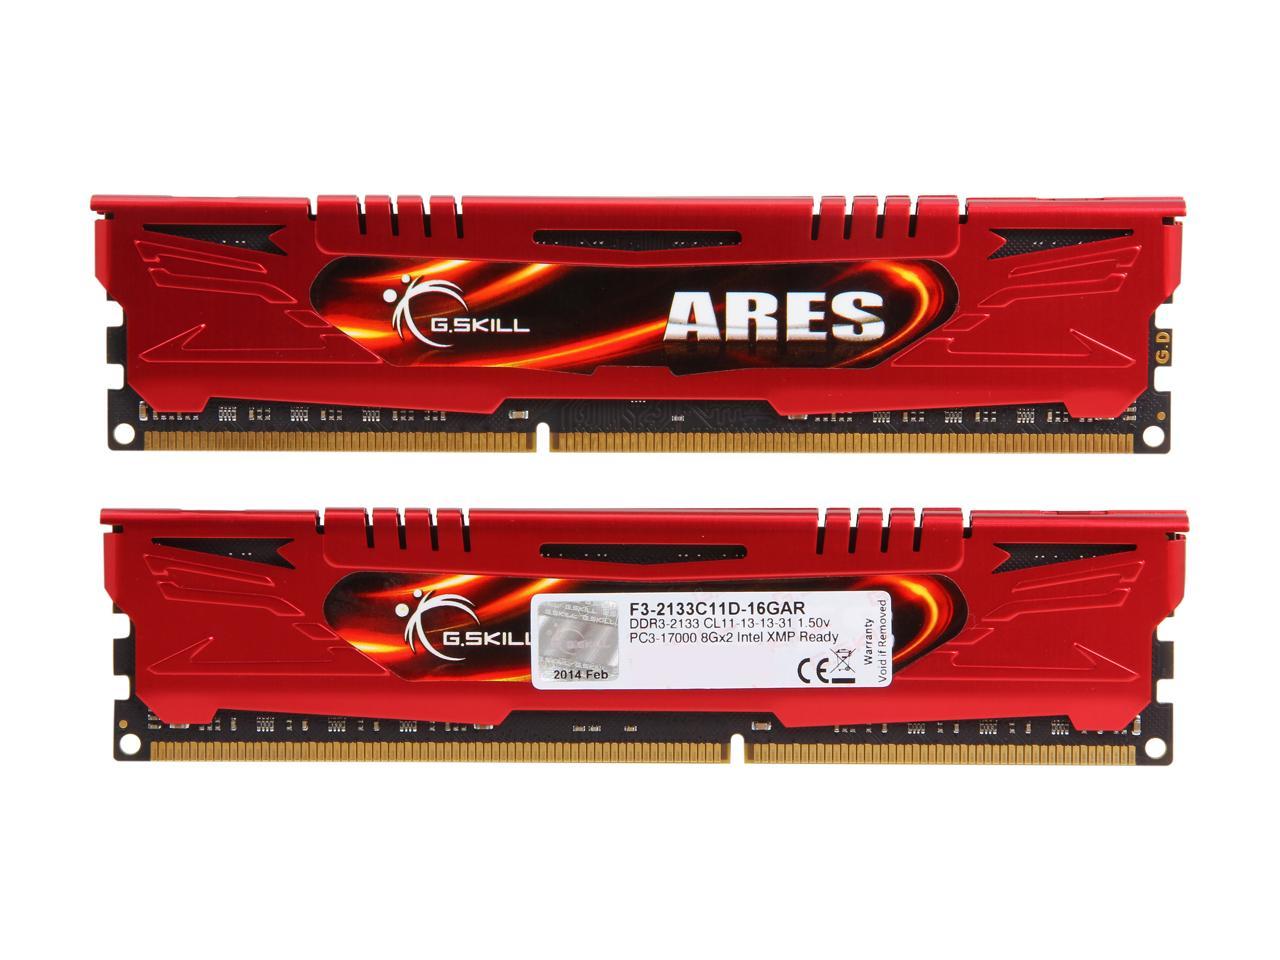 G.SKILL Ares Series 16GB (2 x 8GB) 240-Pin DDR3 SDRAM DDR3 2133 (PC3 17000) Desktop Memory Model F3-2133C11D-16GAR